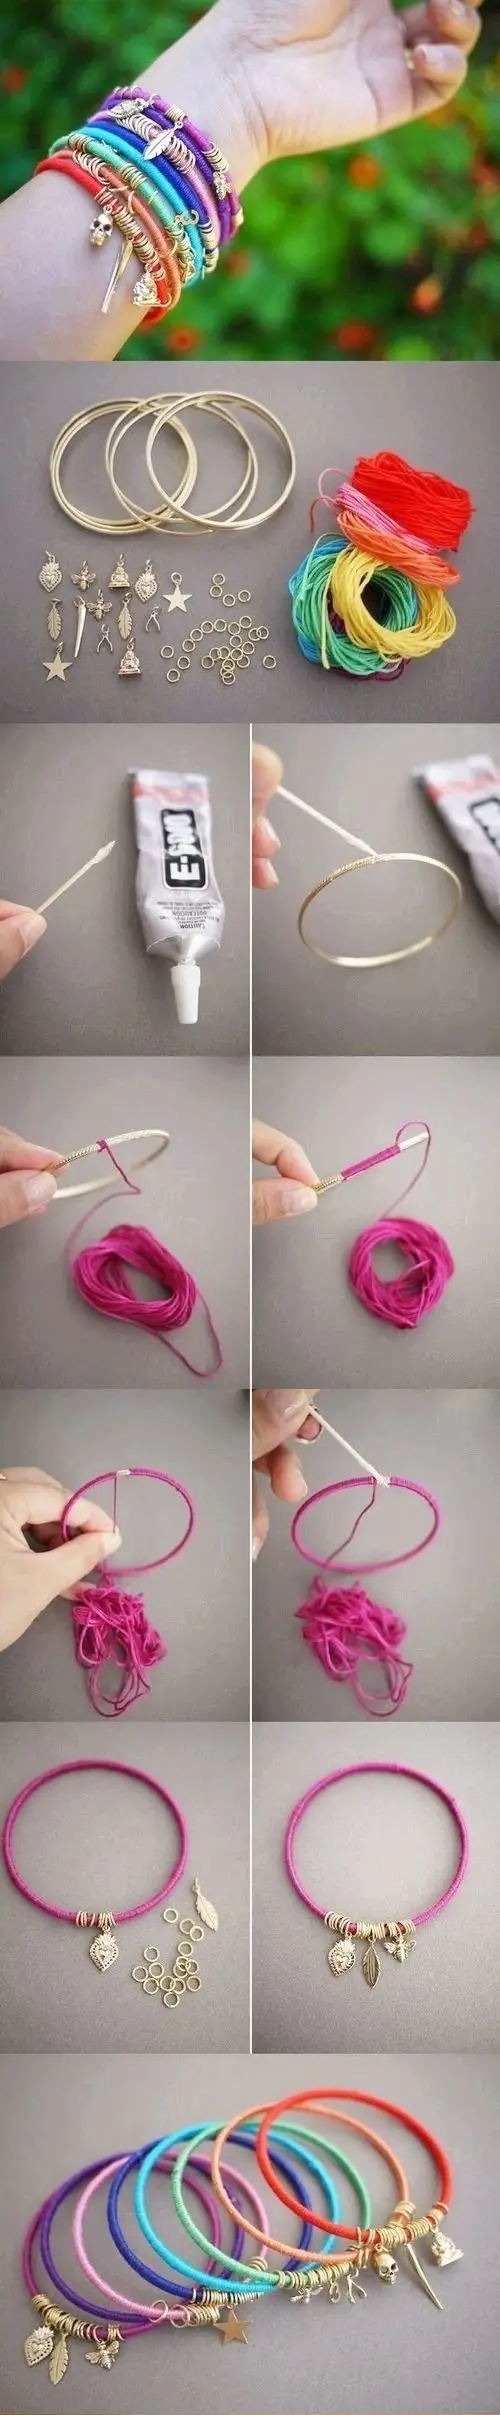 Cute DIY Bracelet Ideas To Make